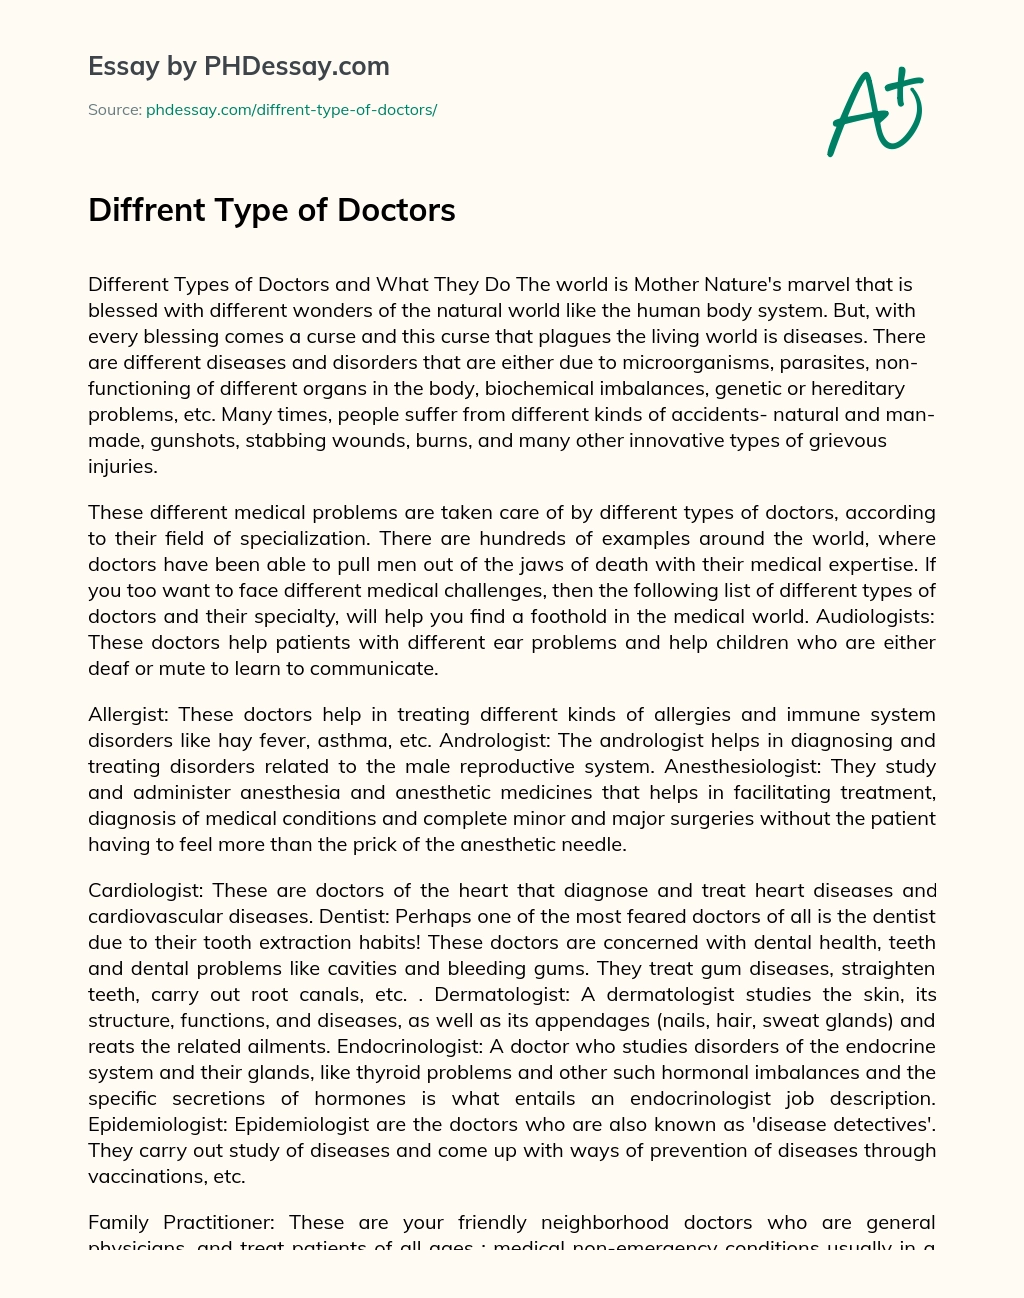 Diffrent Type of Doctors essay